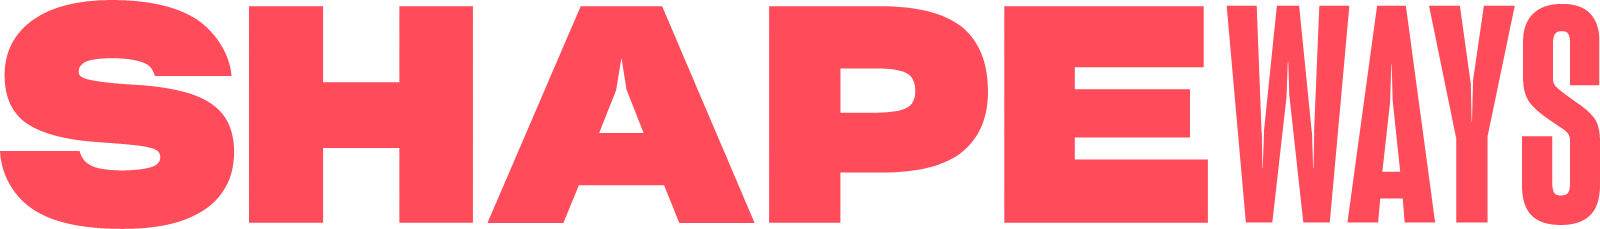 Shapeways logo large (transparent PNG)